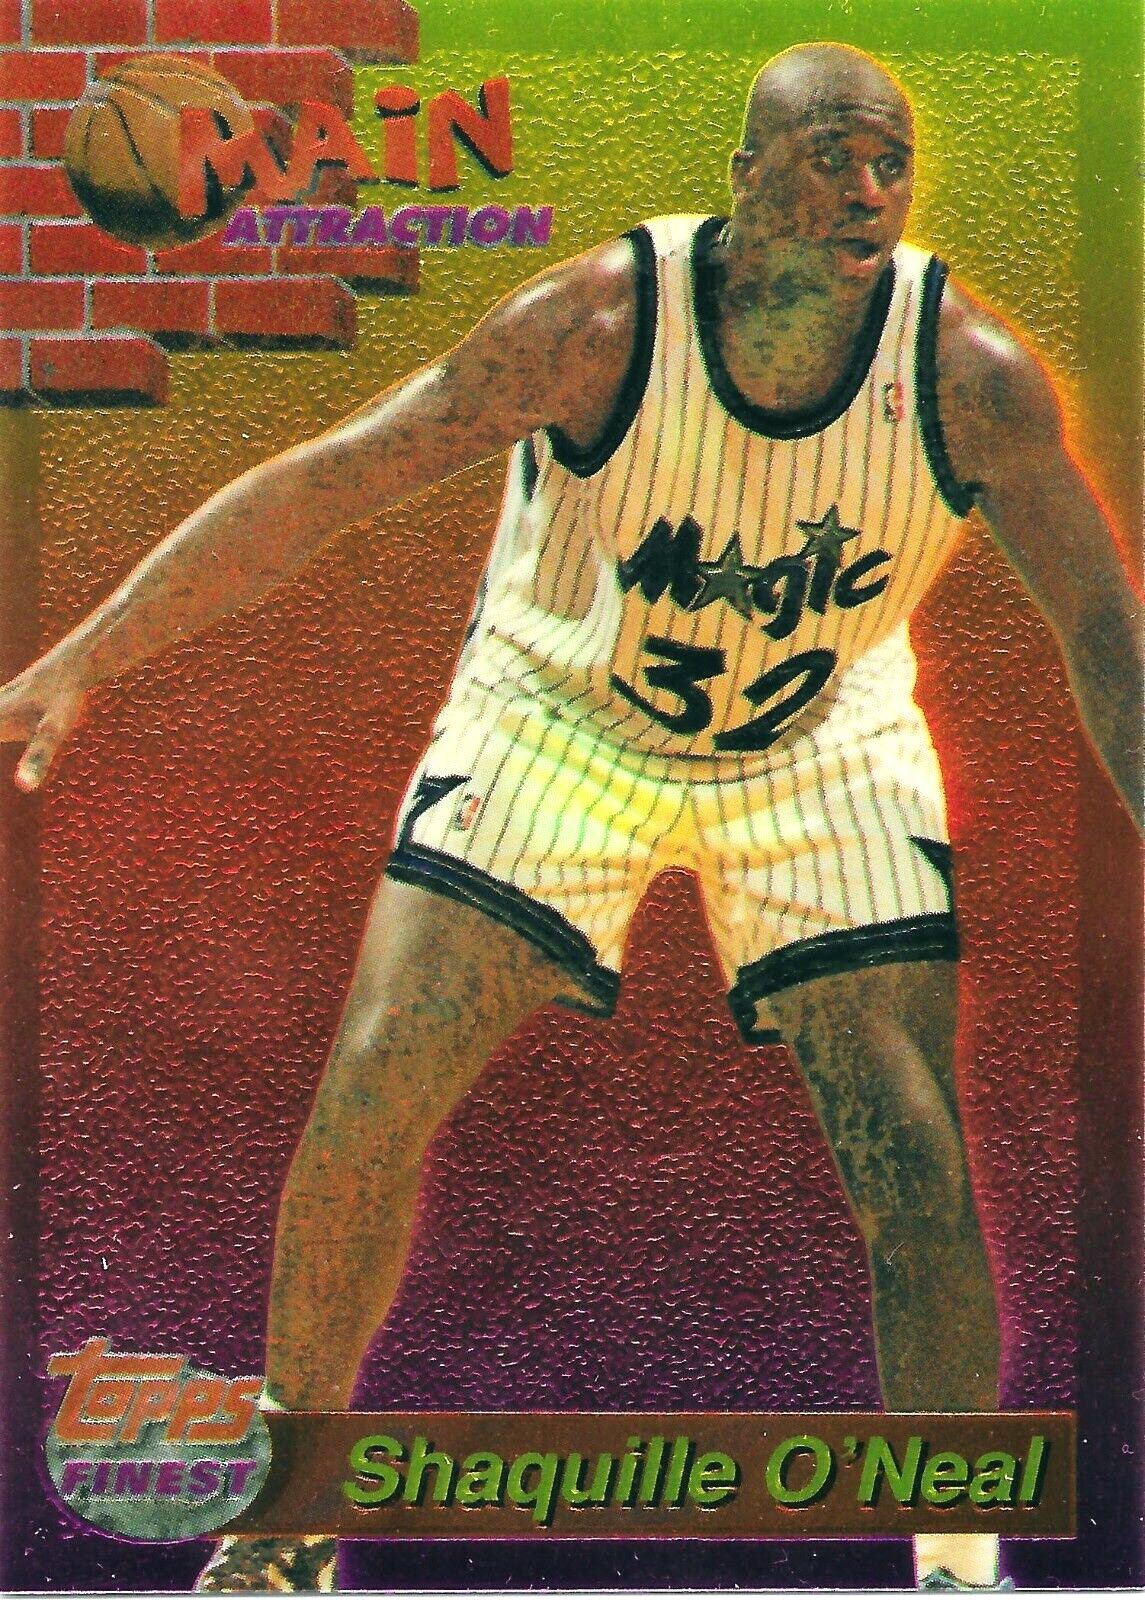 Charles Barkley 1993 94 Topps Finest Basketball 200 Phoenix 